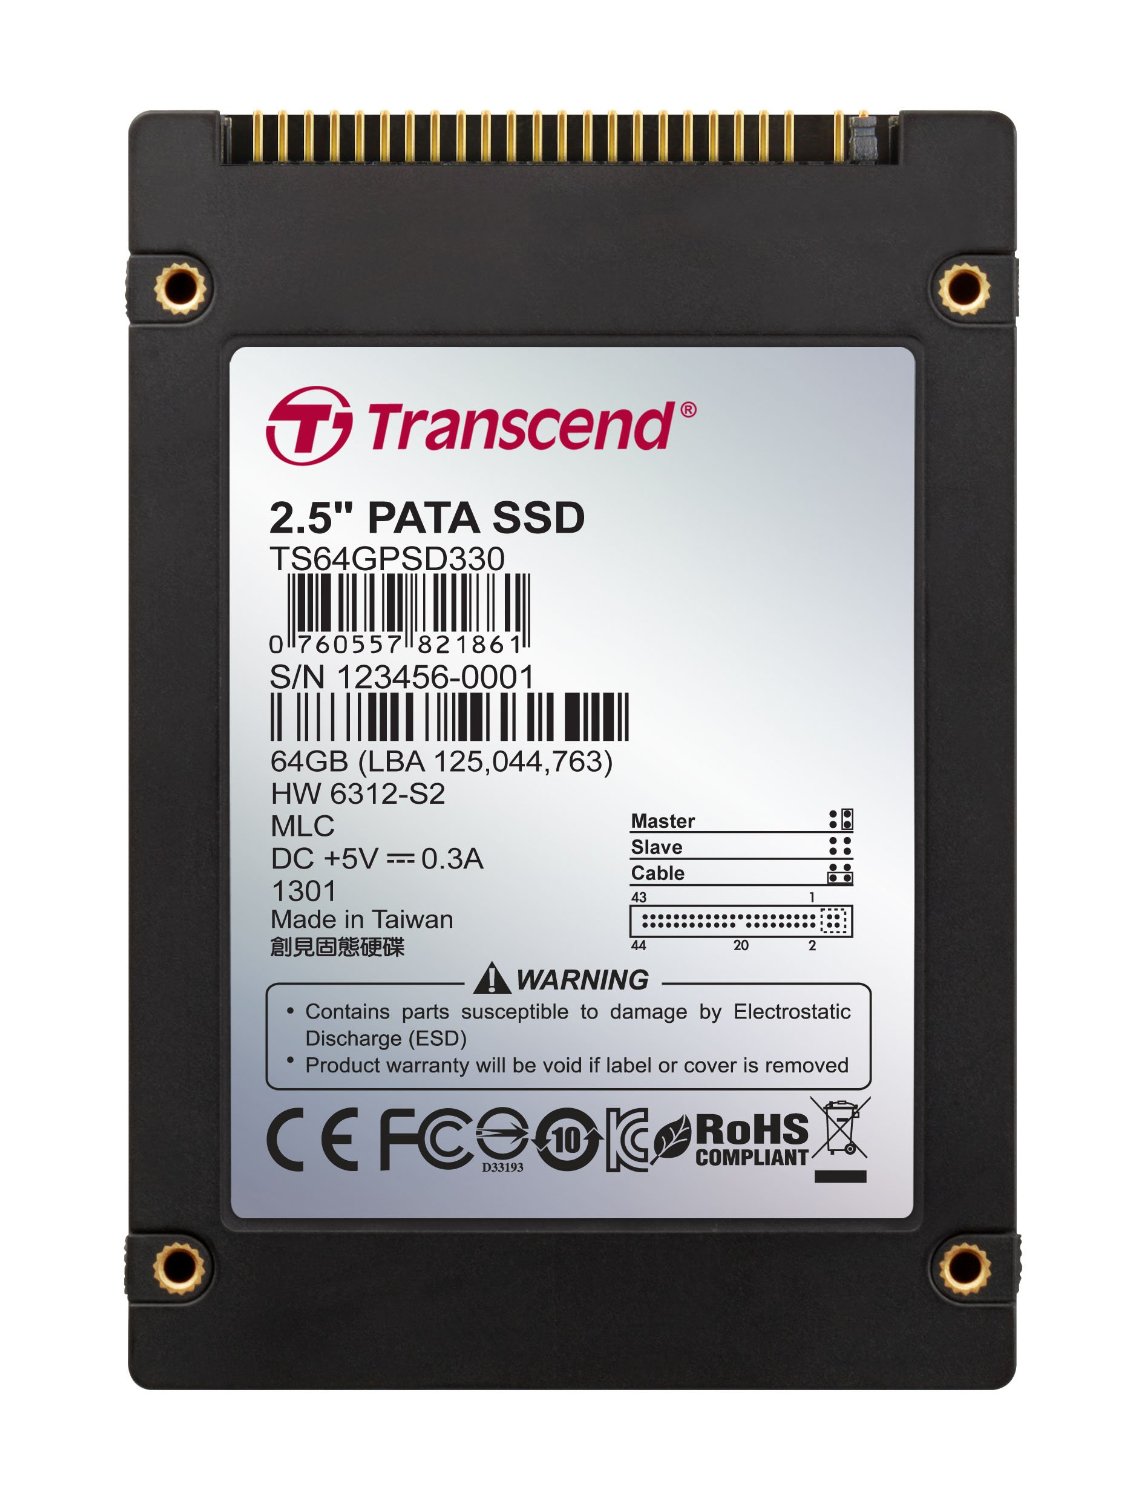 Transcend SSD 330 64GB  2.5' IDE SSD disks